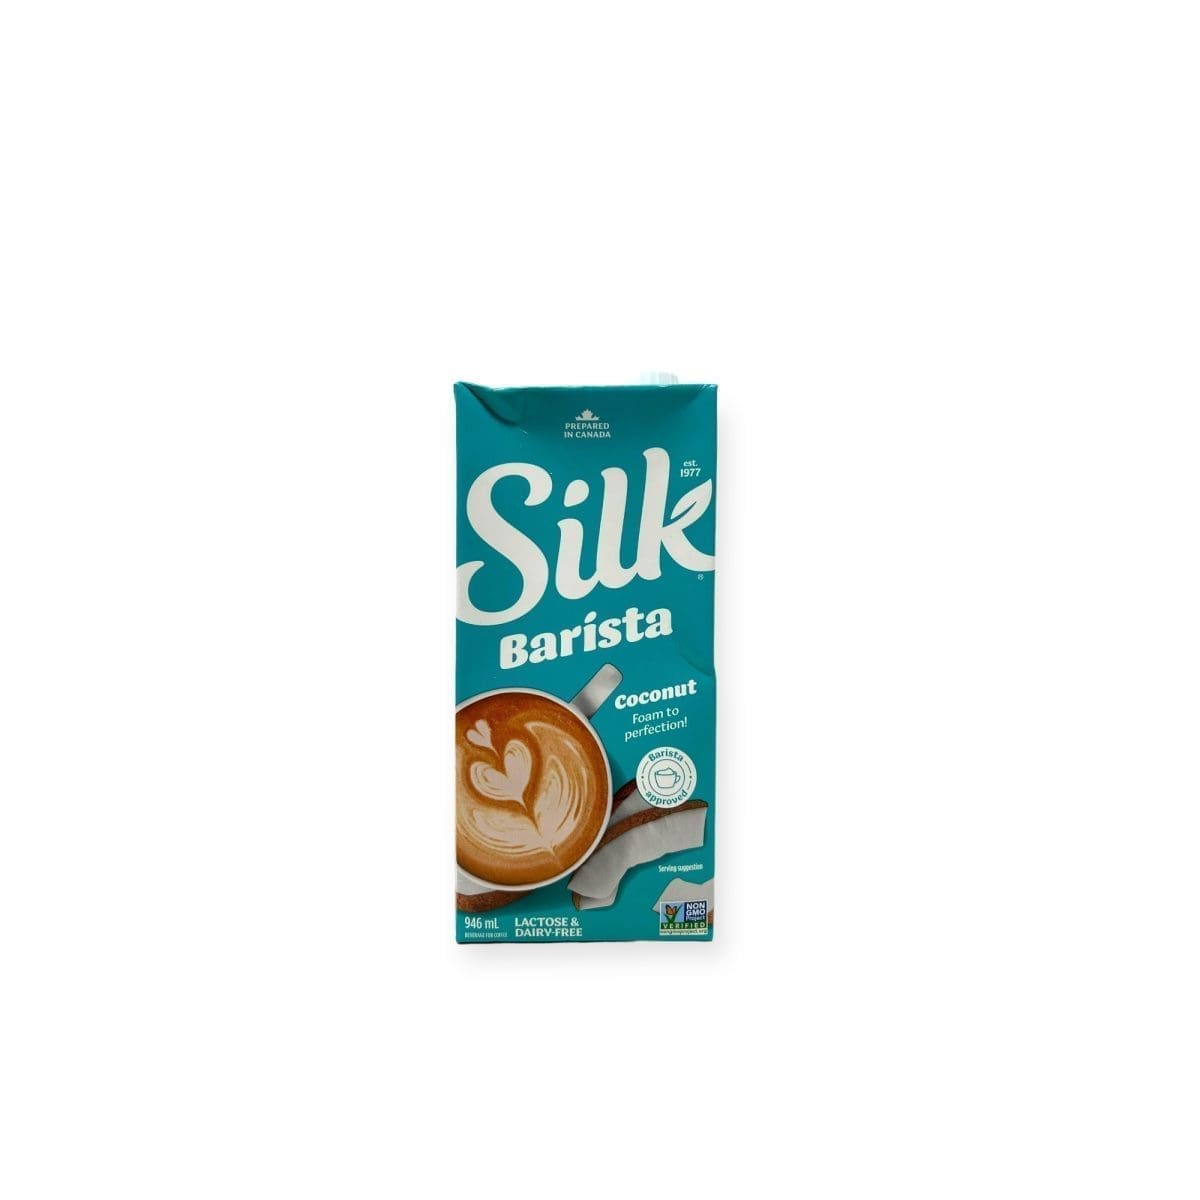 Silk Barista Coconut (946mL)